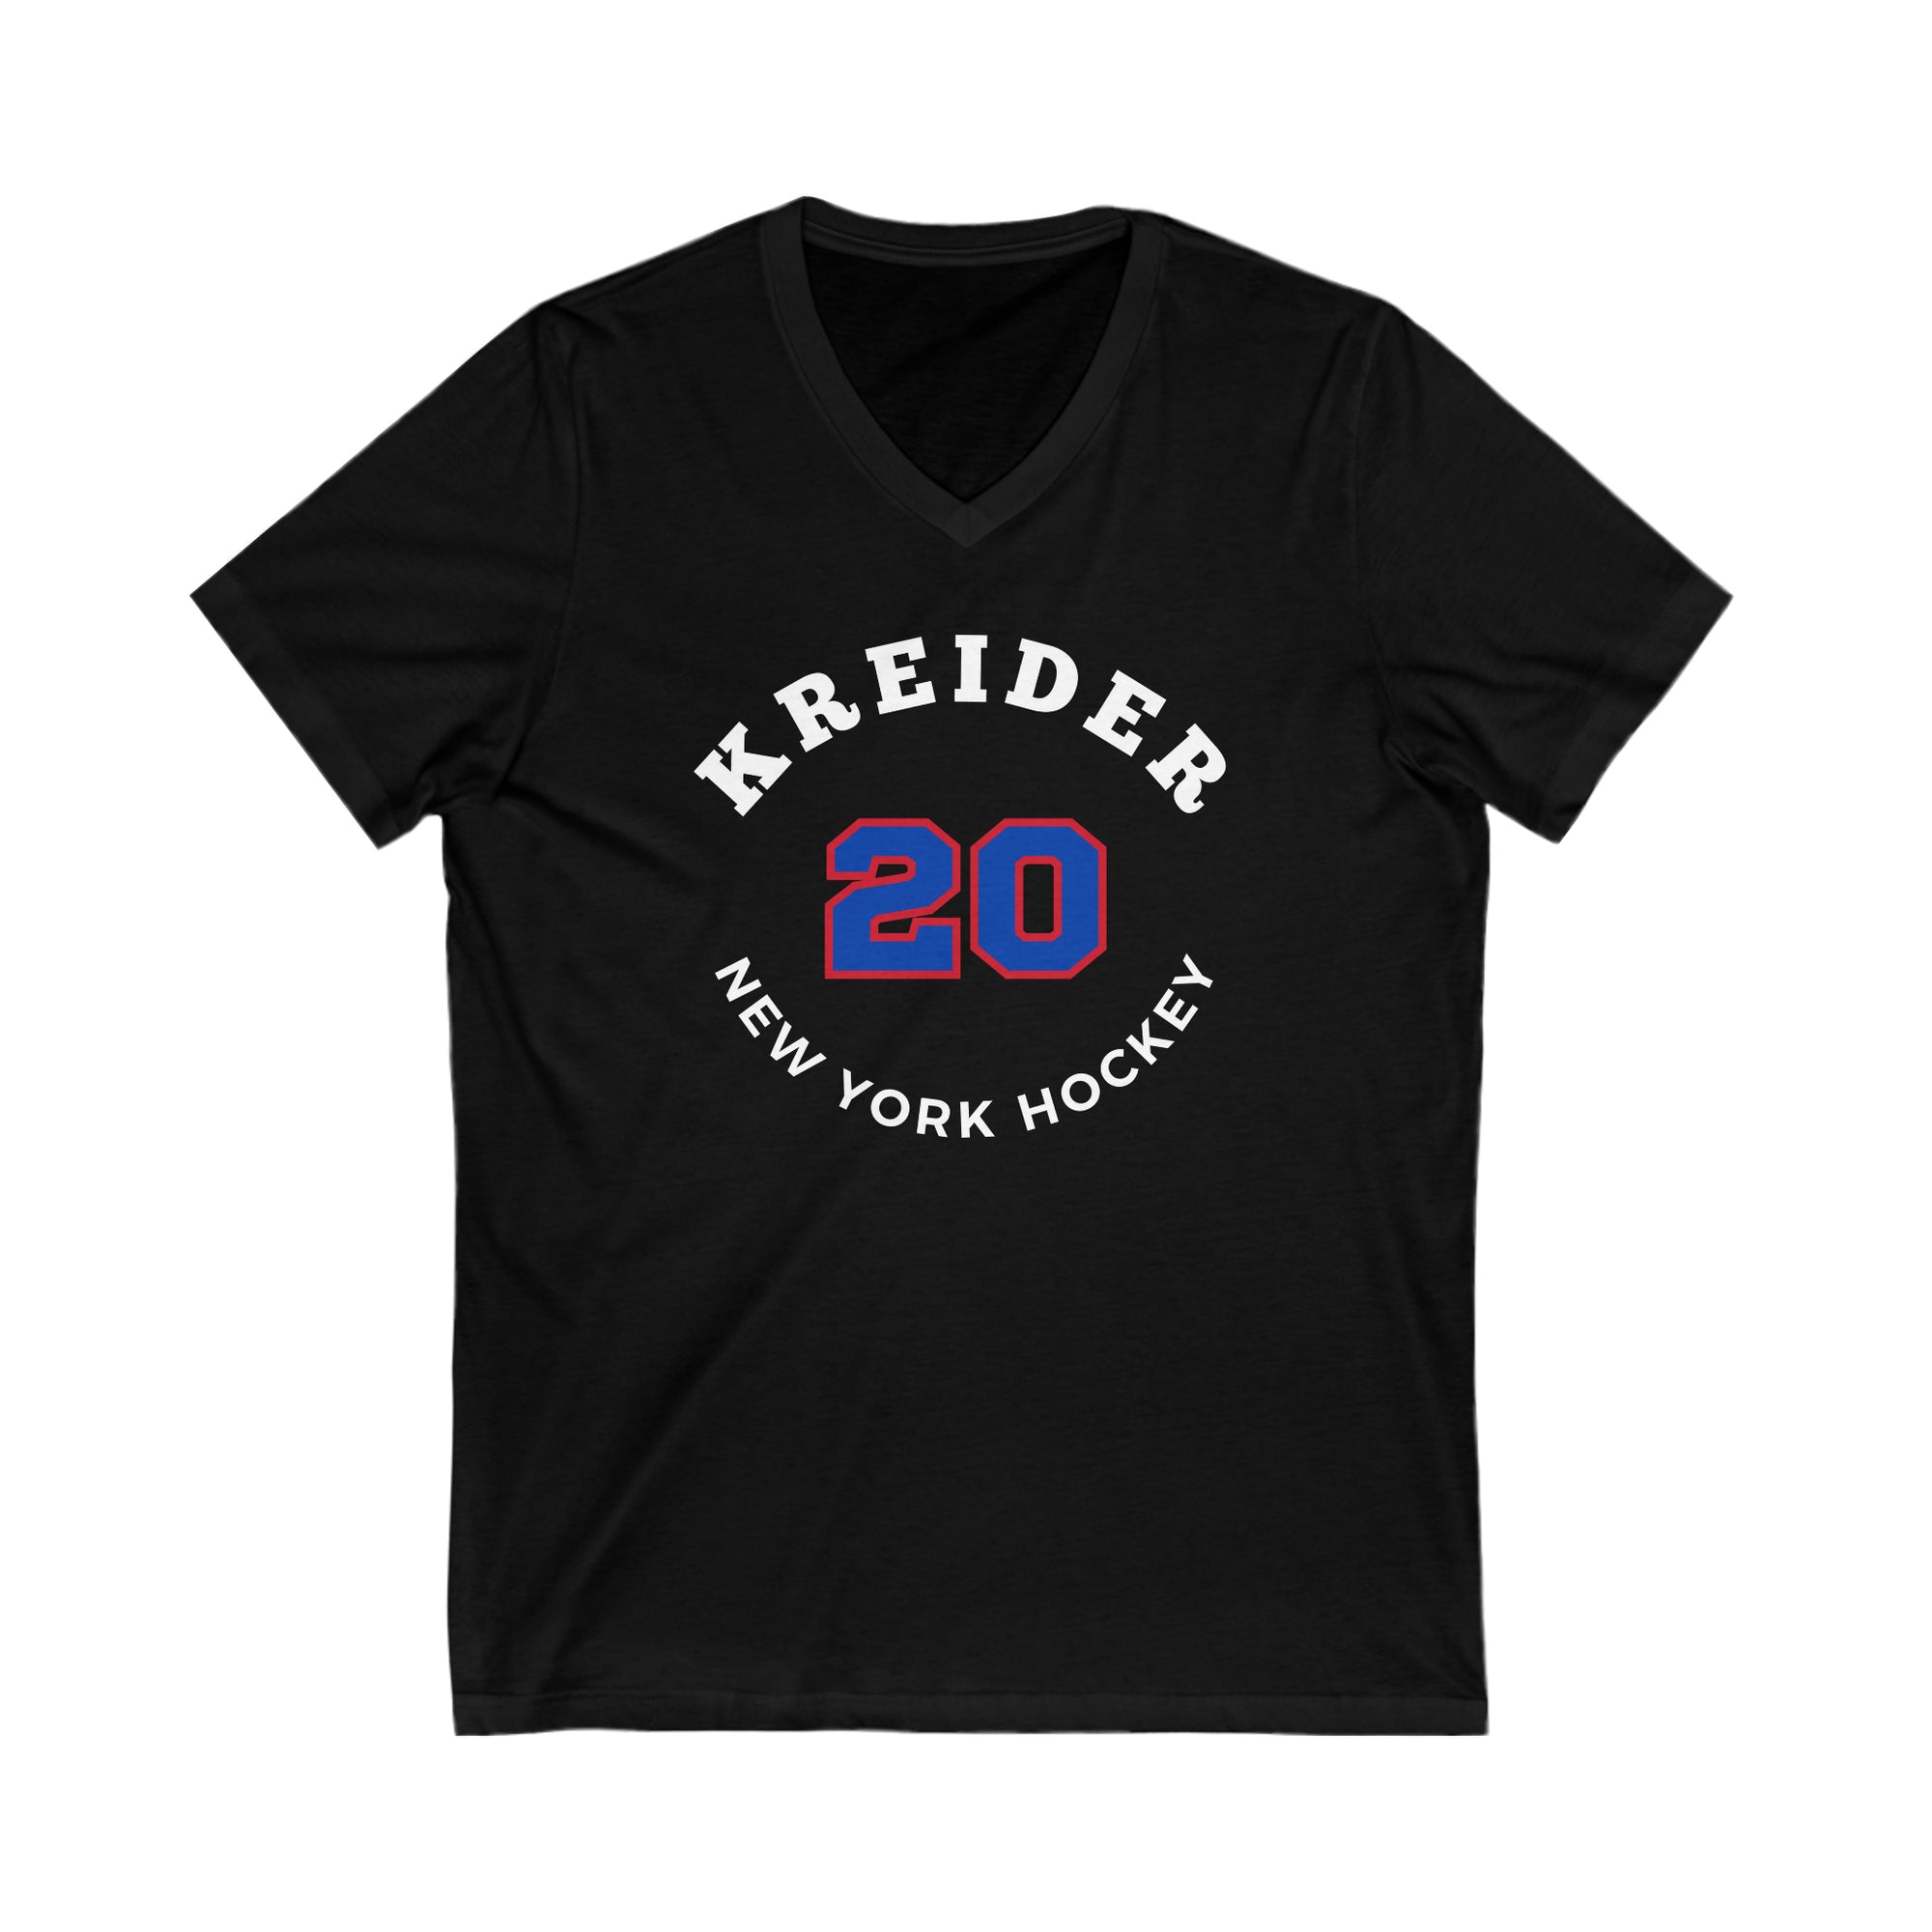 Kreider 20 New York Hockey Number Arch Design Unisex V-Neck Tee